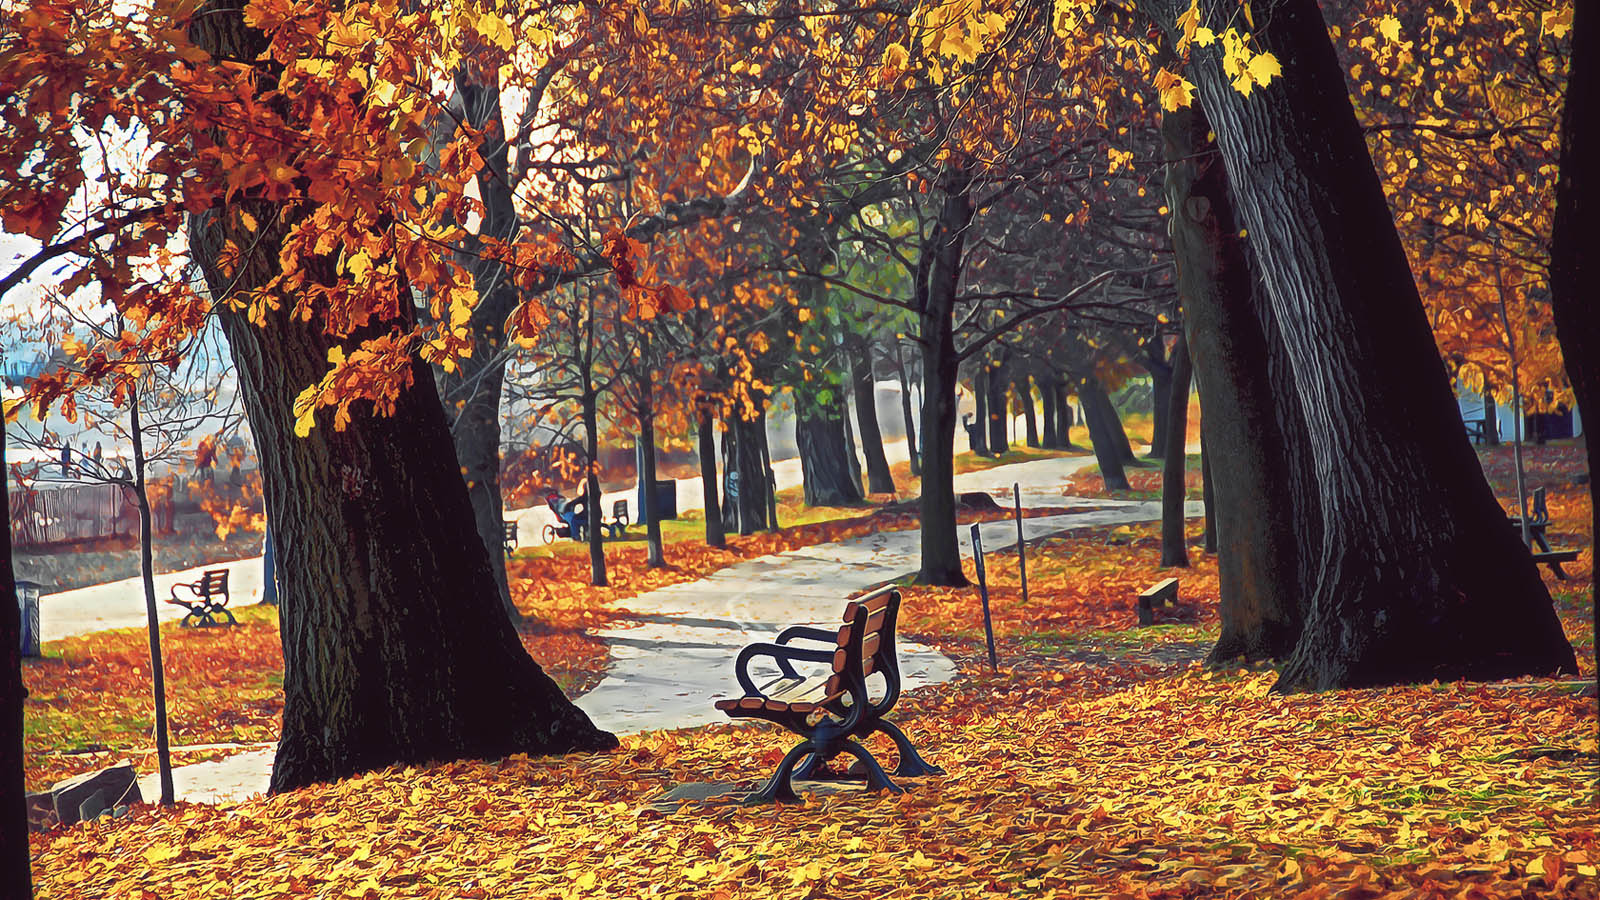 Autumn October 2011 Landscape Wallpaper